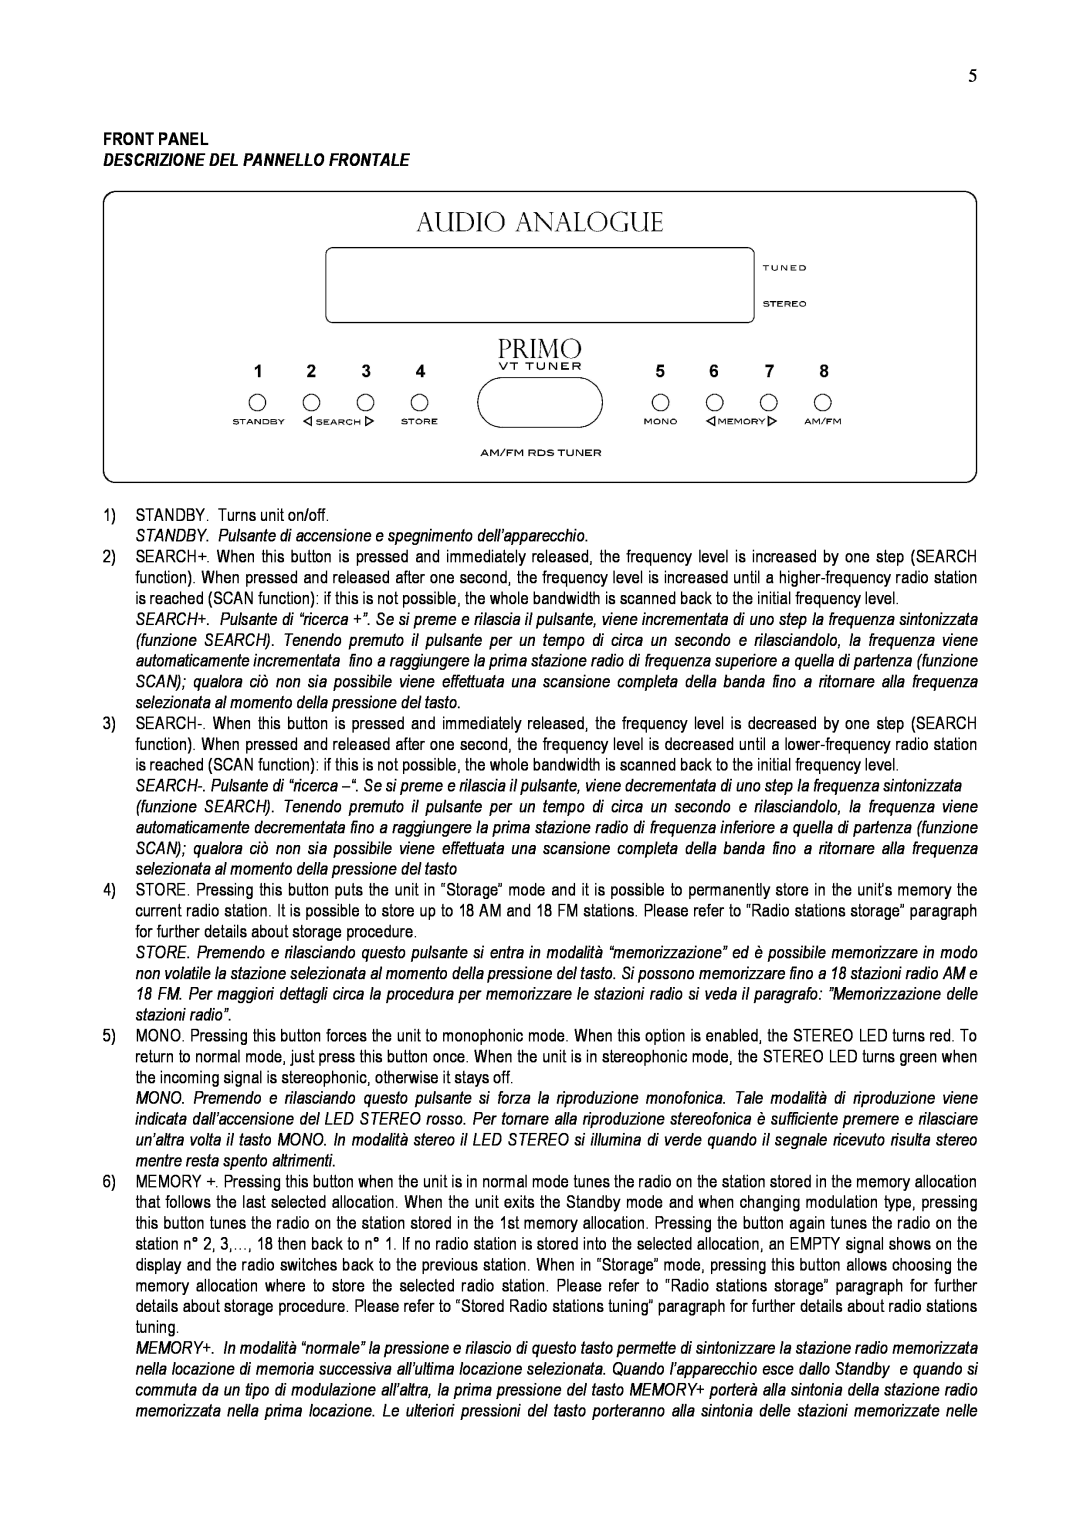 Audio Analogue SRL AM/FM RDS Vacuum Tube Tuner owner manual Front Panel, Descrizione Del Pannello Frontale 